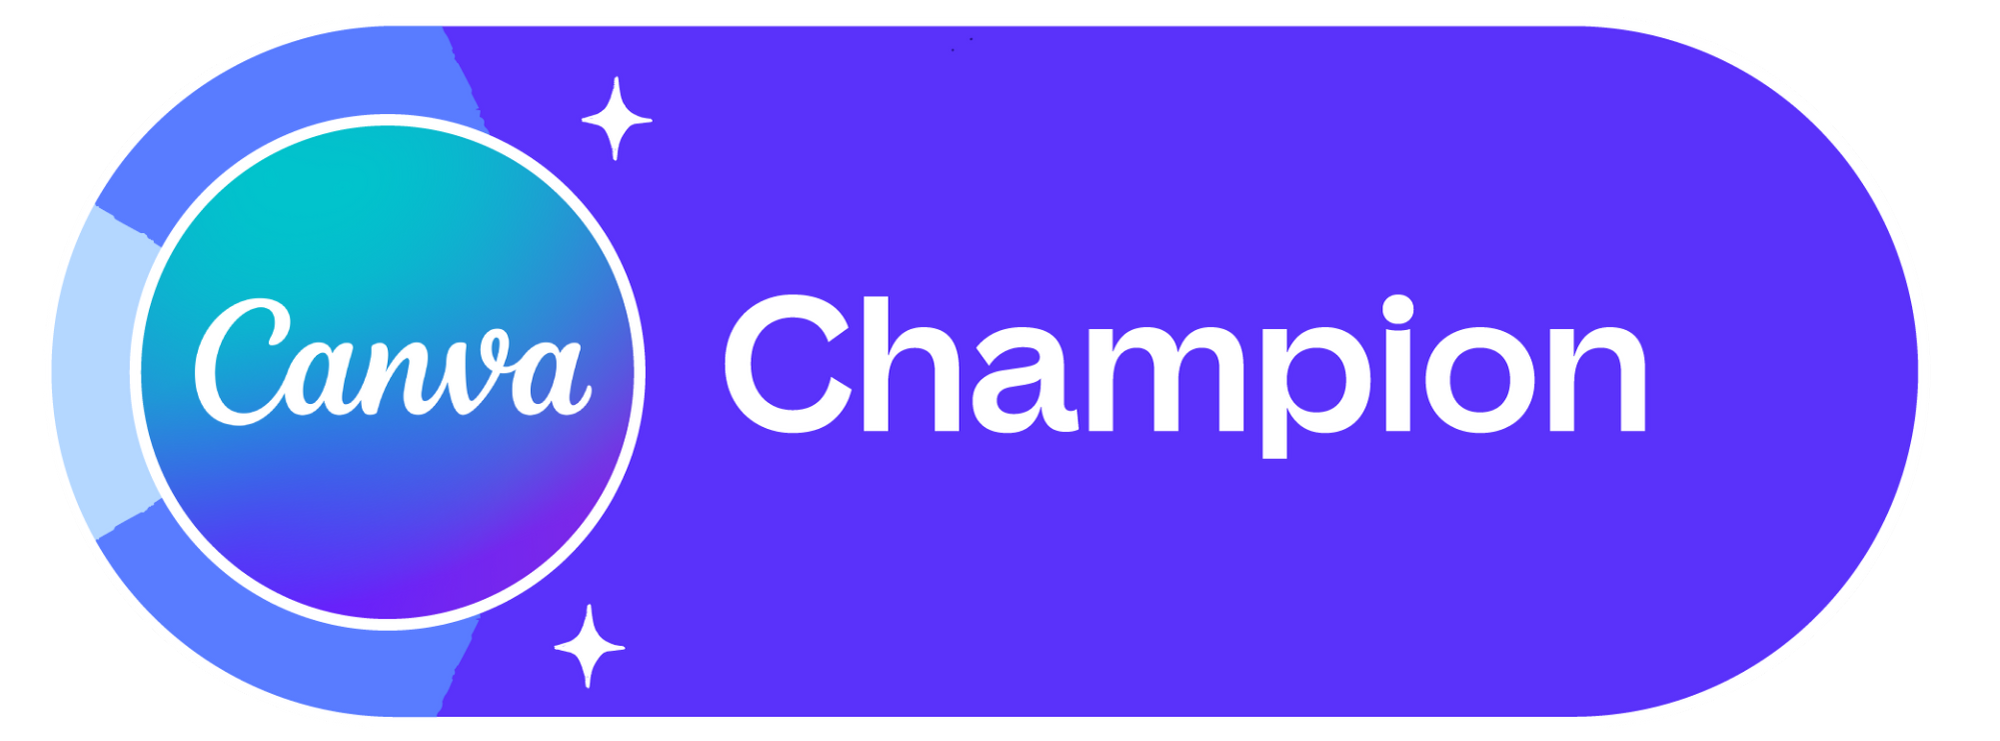 Canva Champion logo